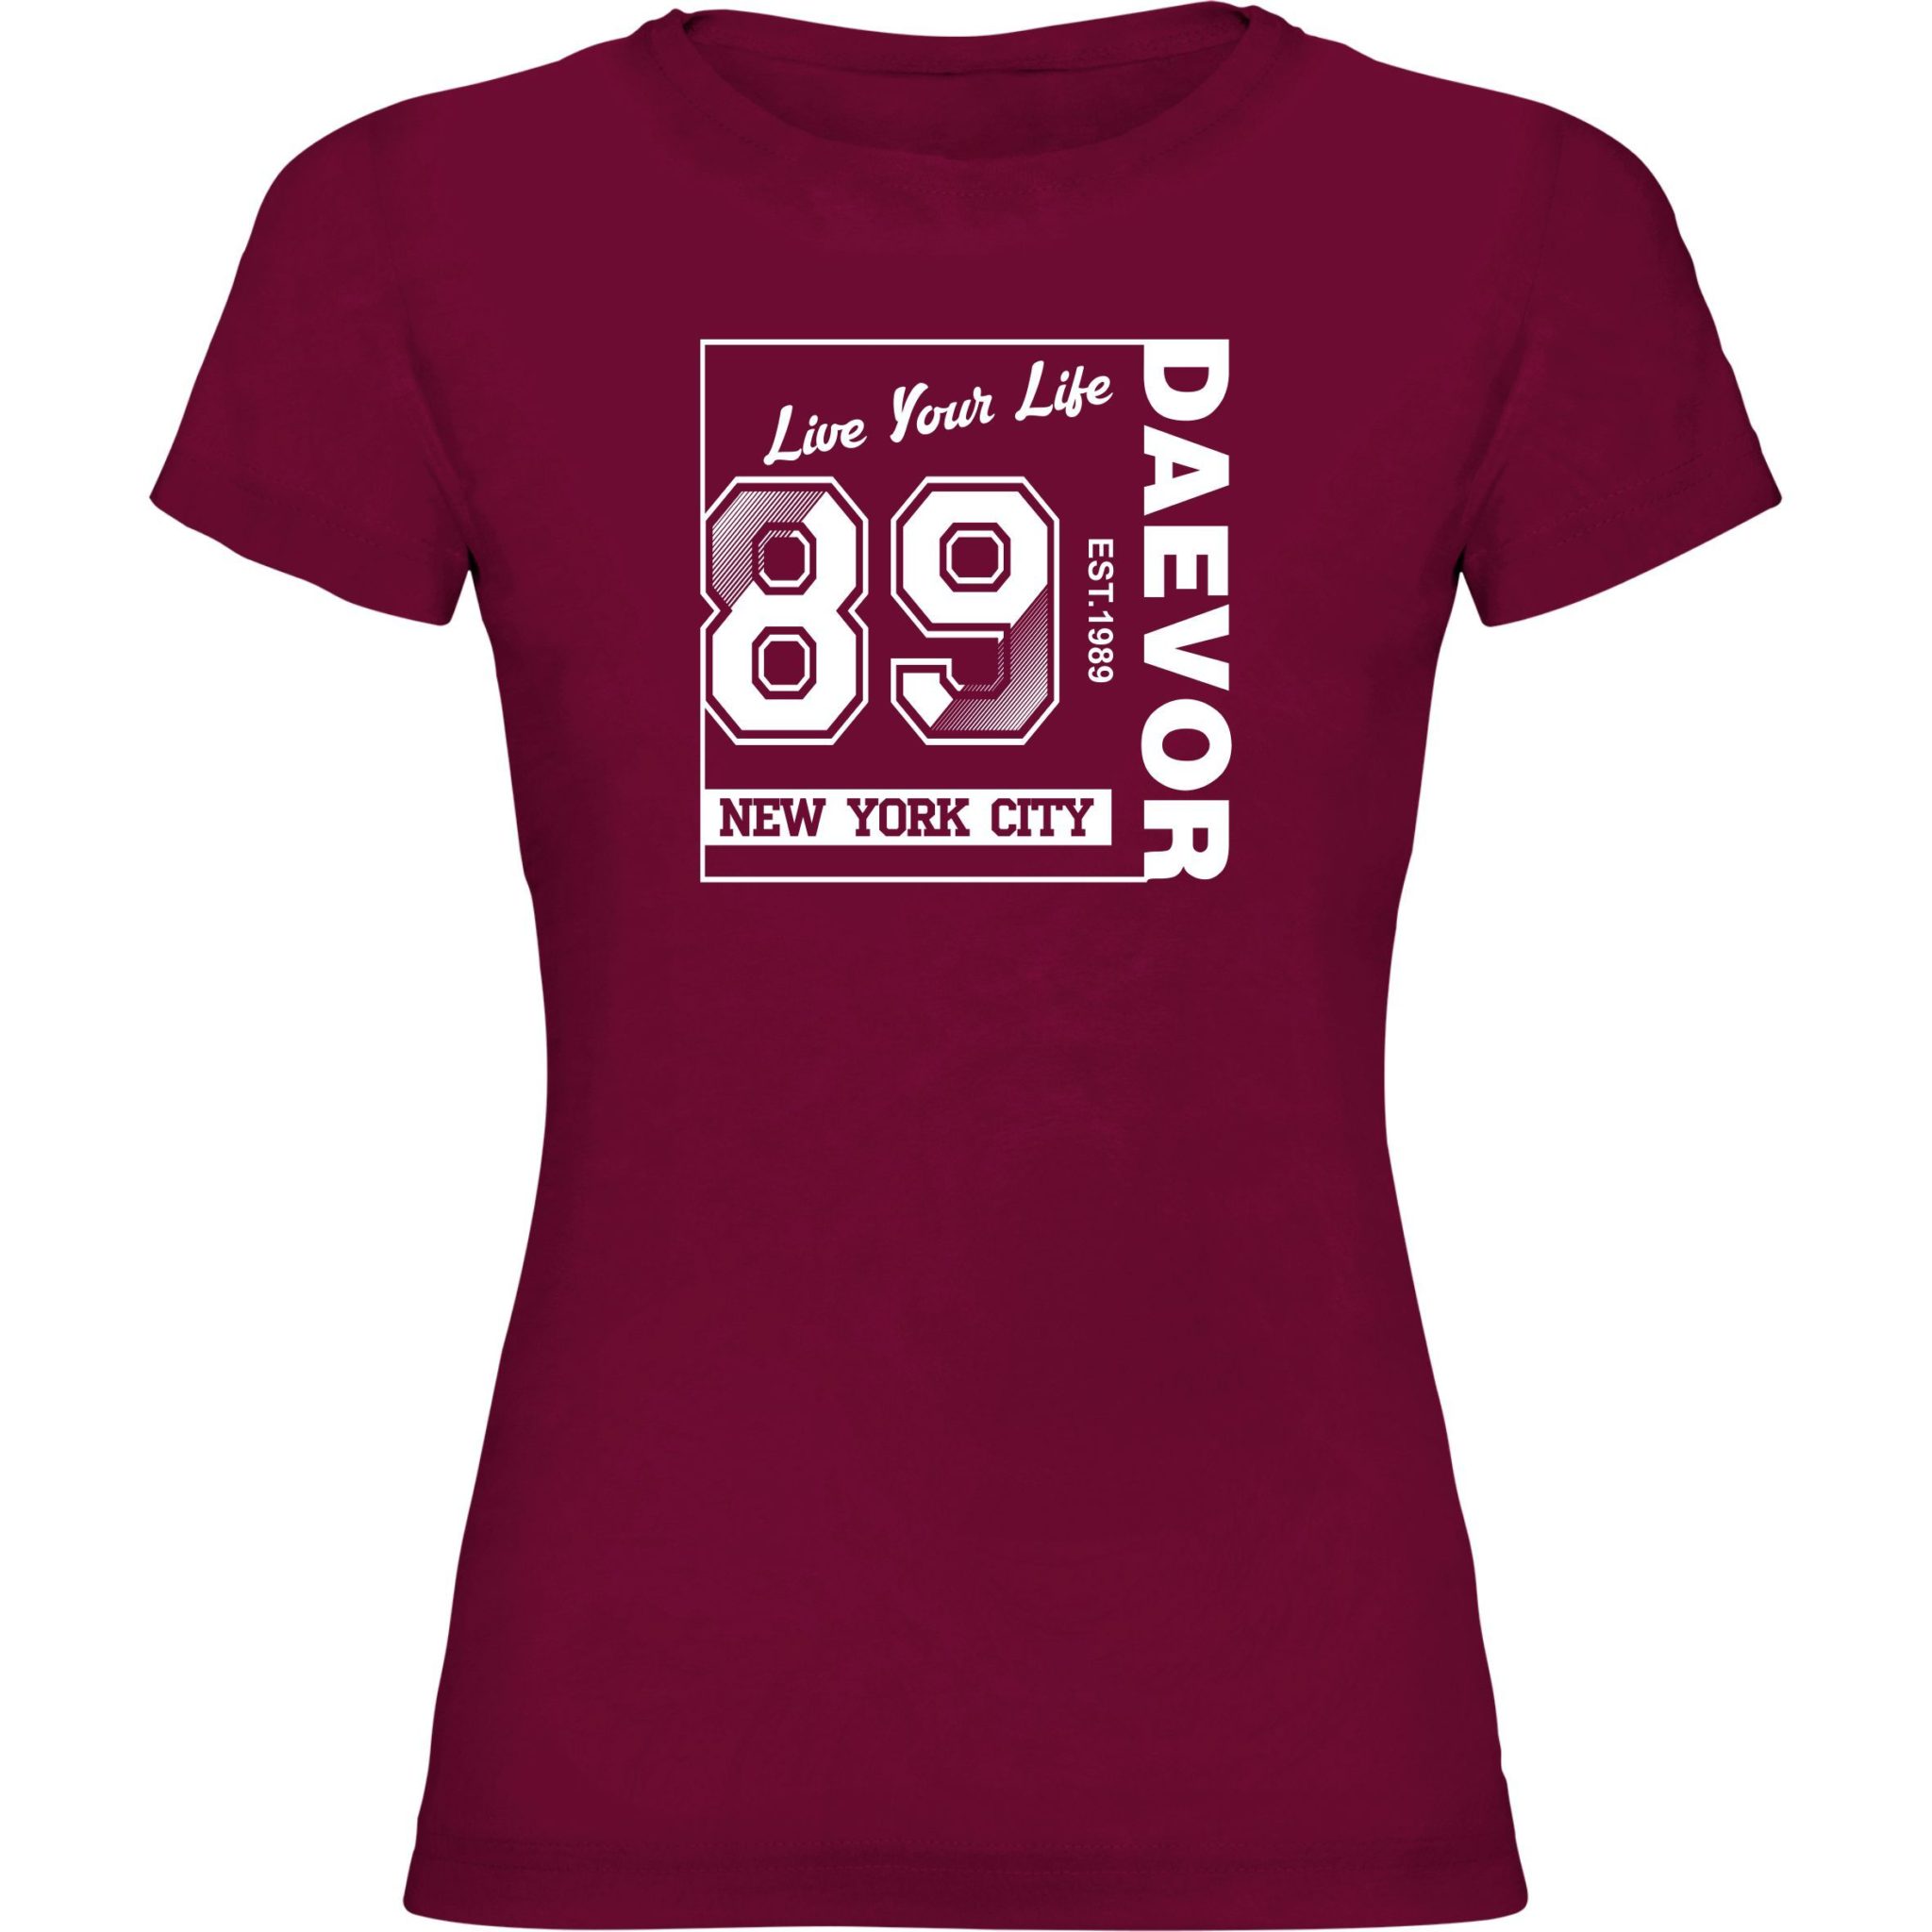 Camiseta Daevor Woman NewYorkCity 89